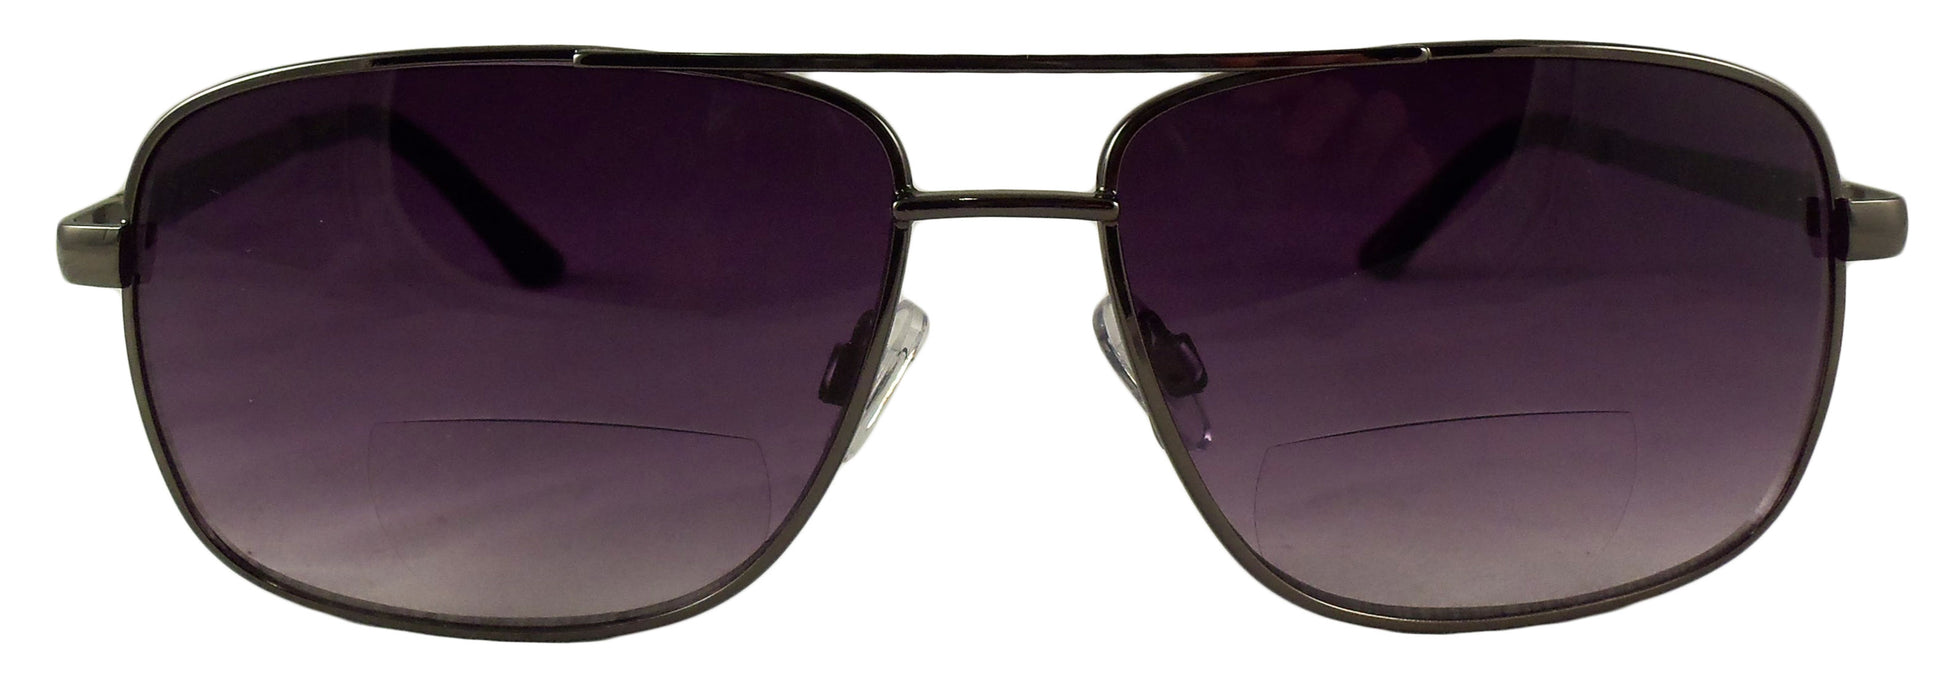 Mens Bifocal Sunglasses - Low Profile Sun Readers - Antiglare Reading Glasses - Gradient UV400 Lens - Ideal Eyewear